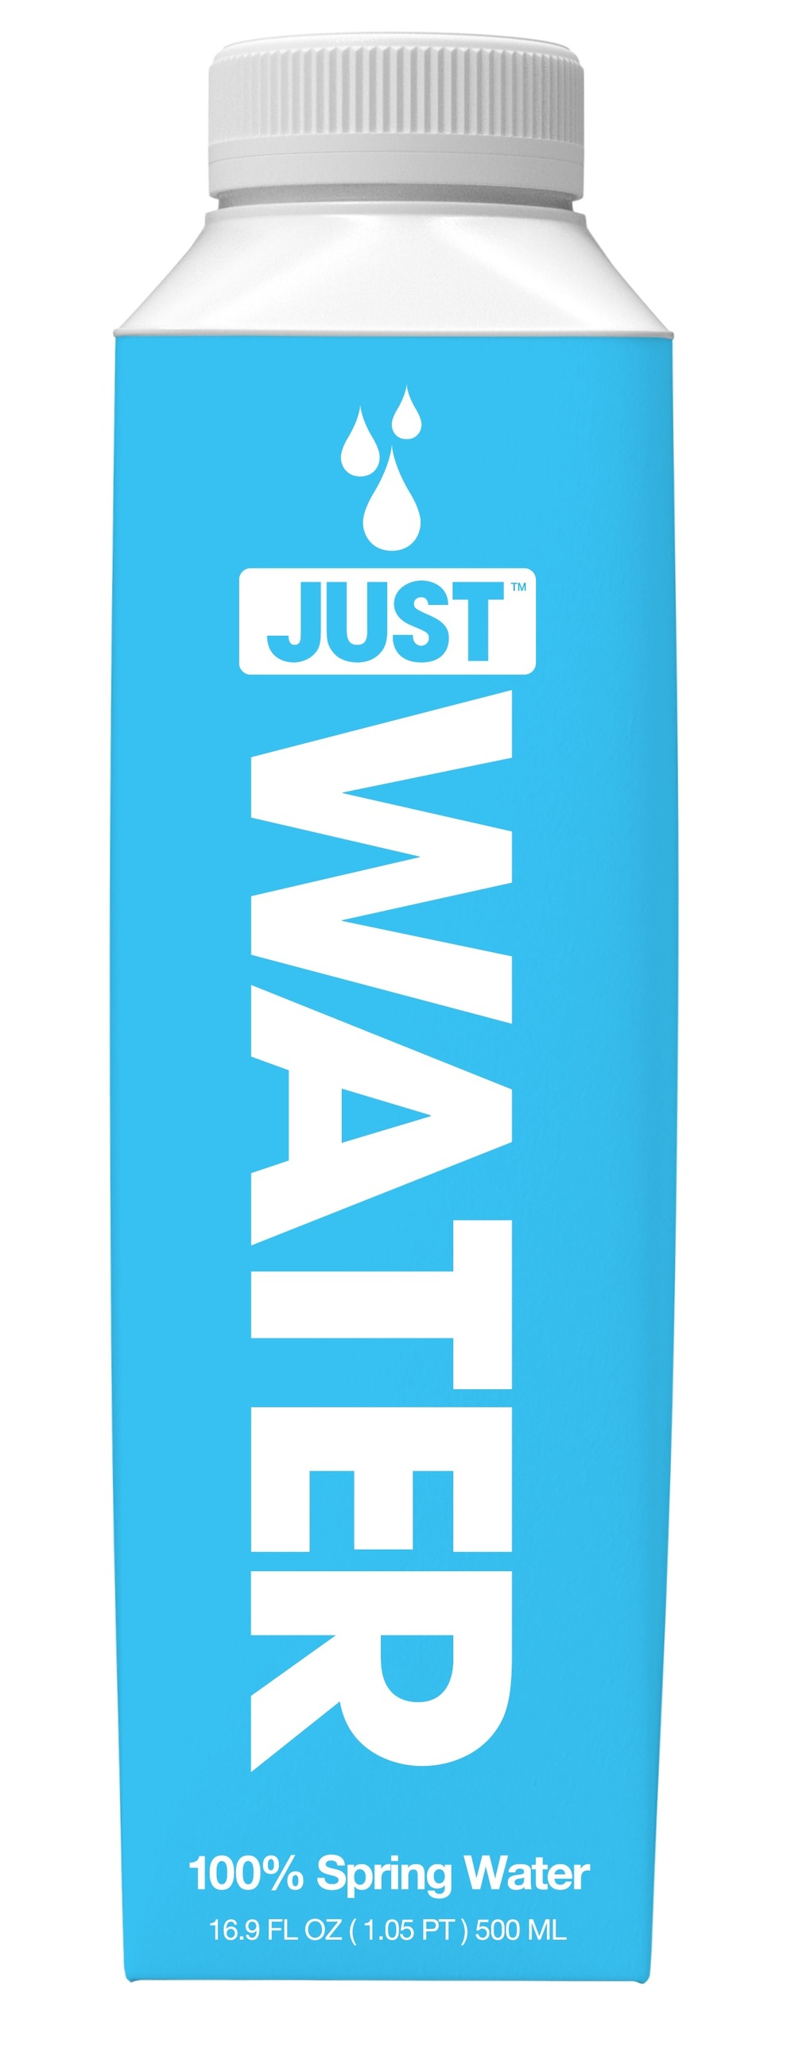 Just Water's Carton Difference  Dieline - Design, Branding